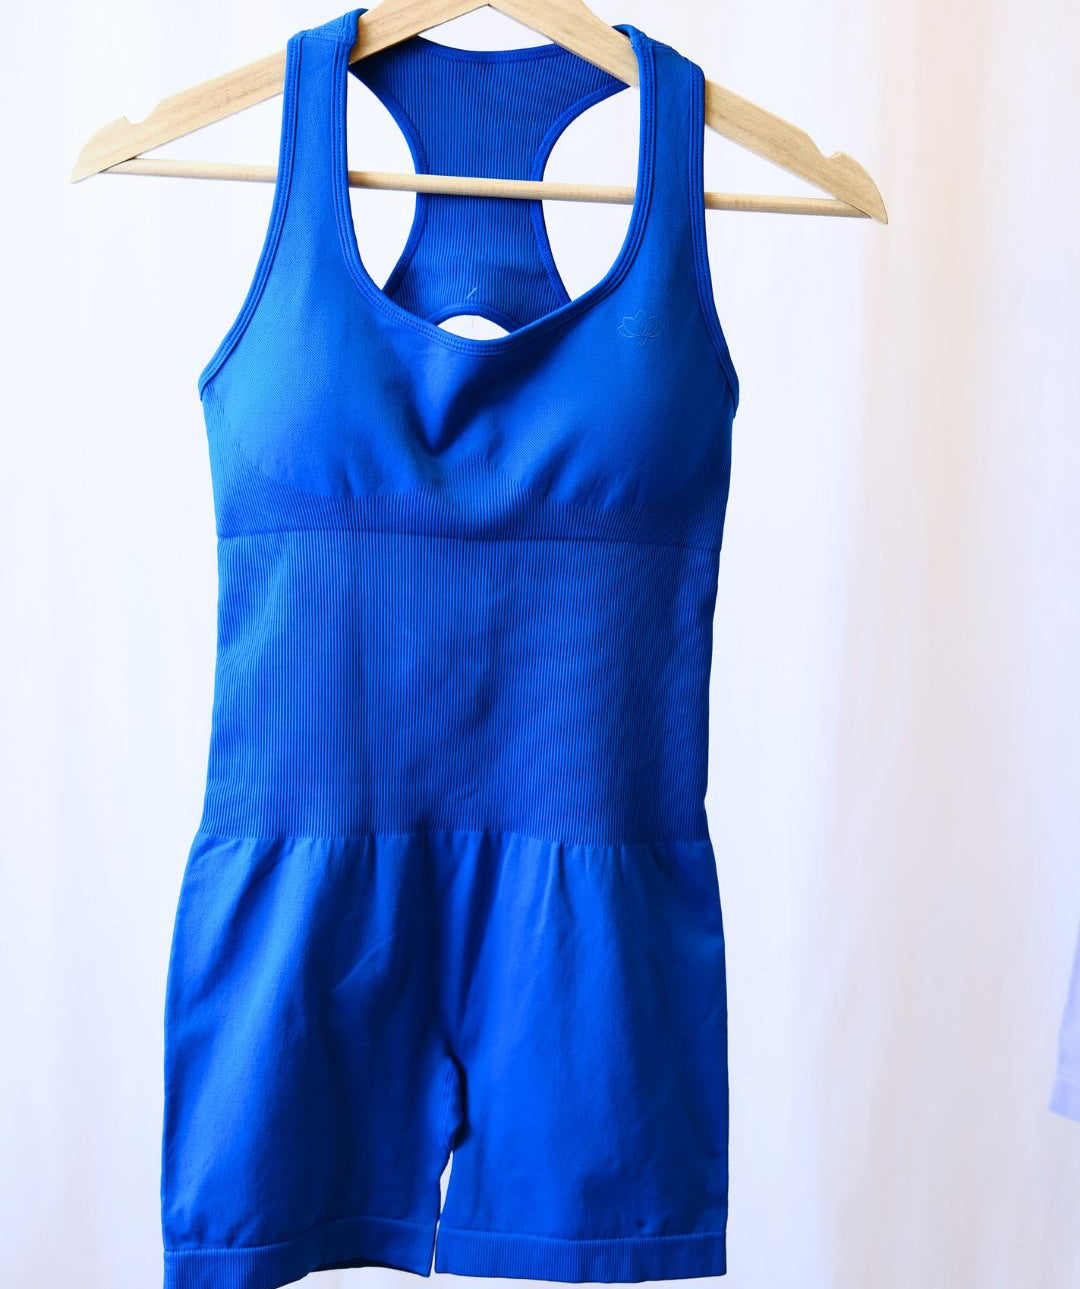 Jentle - Kira Bodyshorts (Blue)